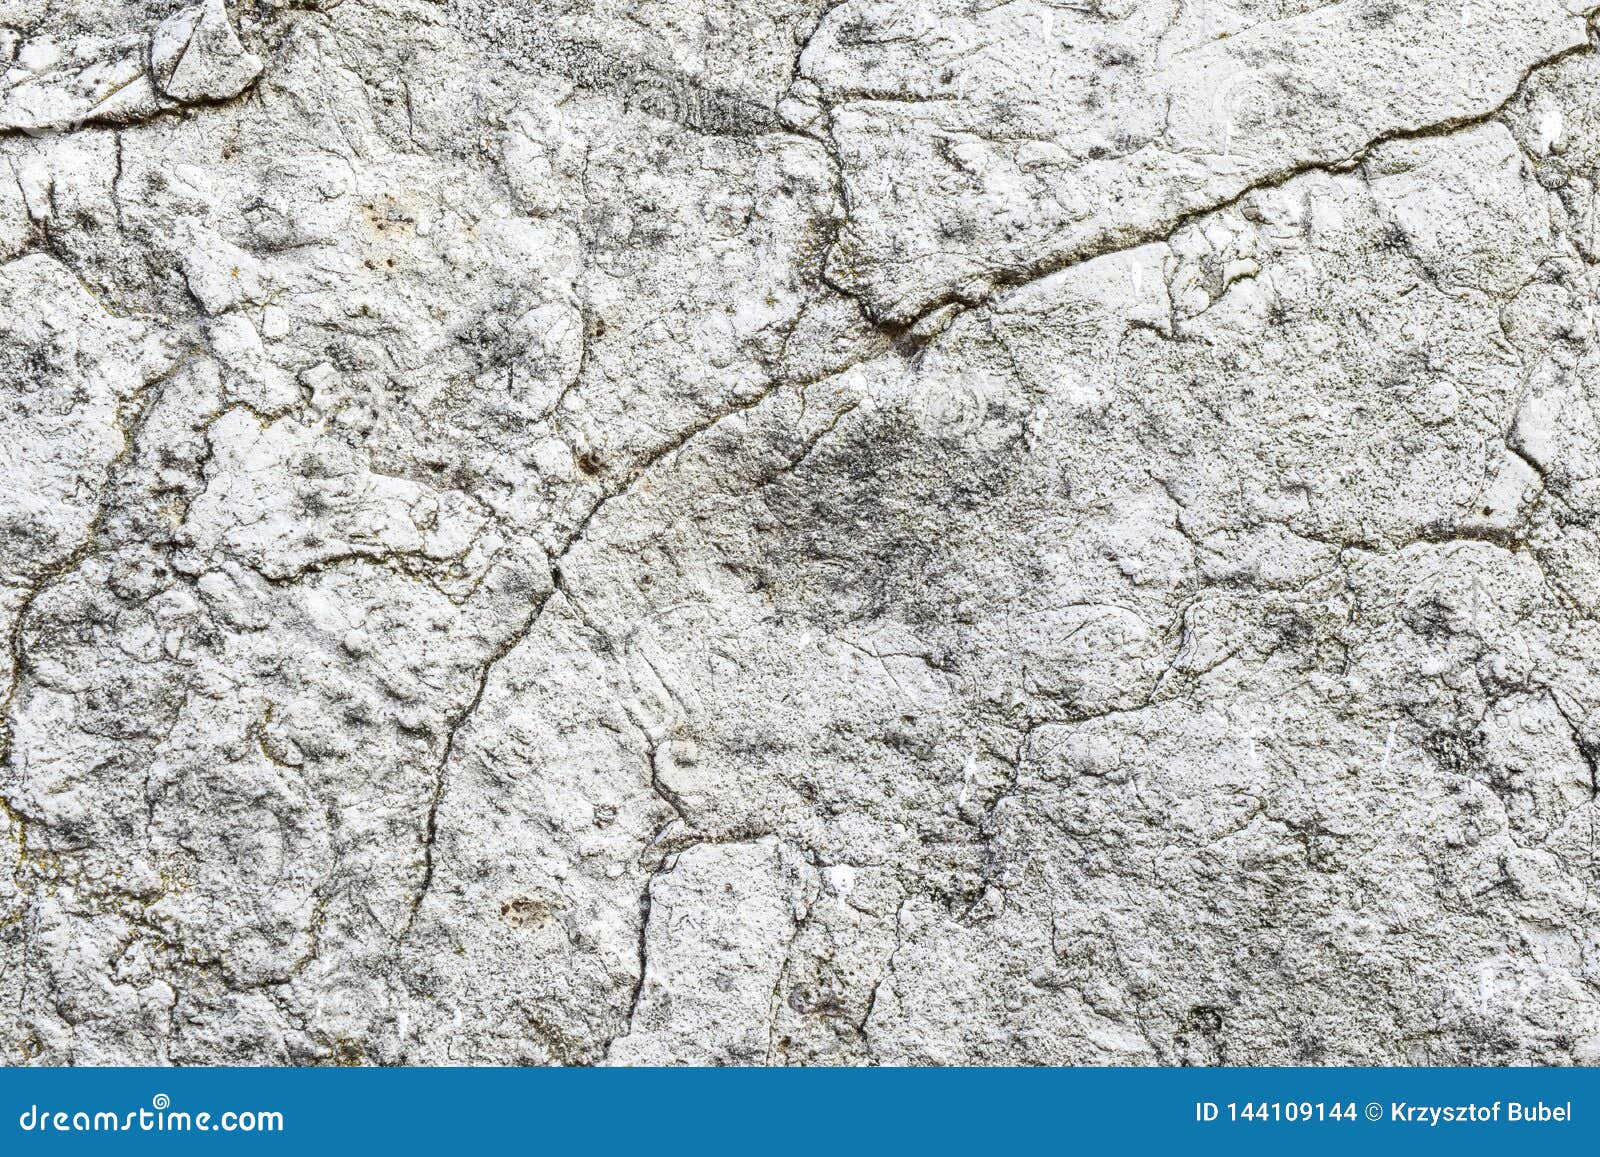 limestone wall of textura